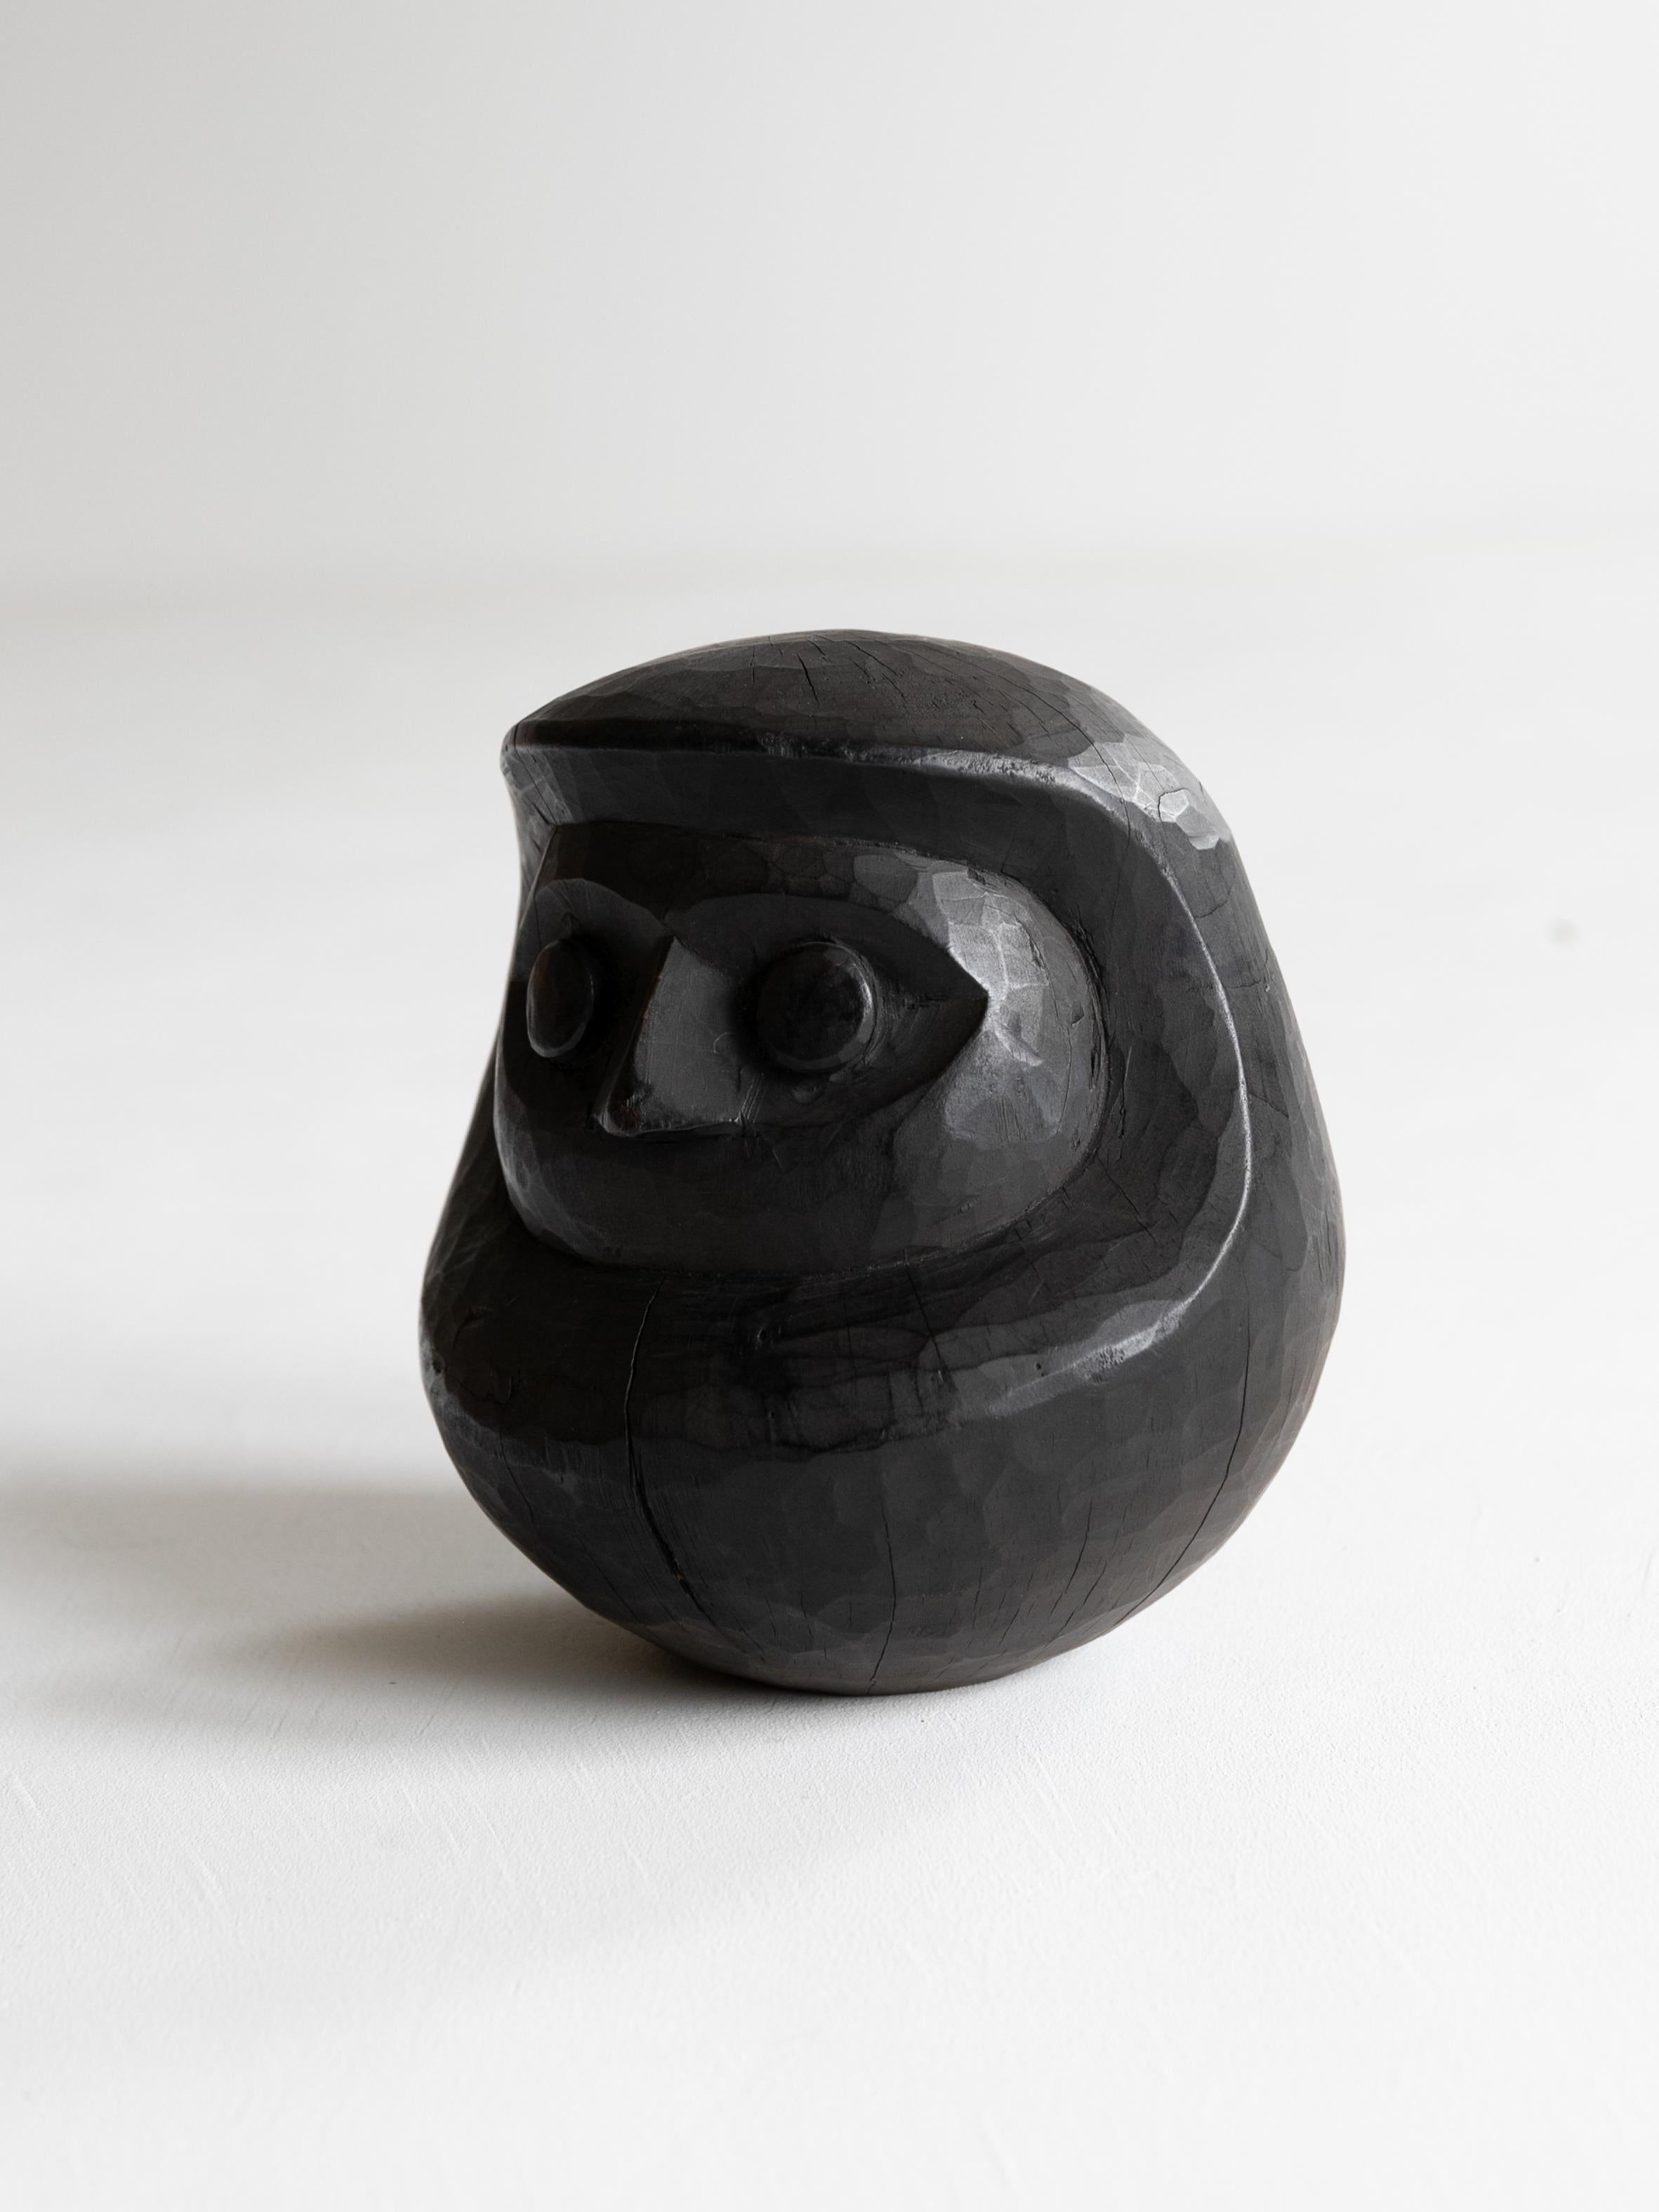 Japanese Antique Wood Carving Black Daruma 1860s-1920s / Wabi Sabi Sculpture For Sale 2